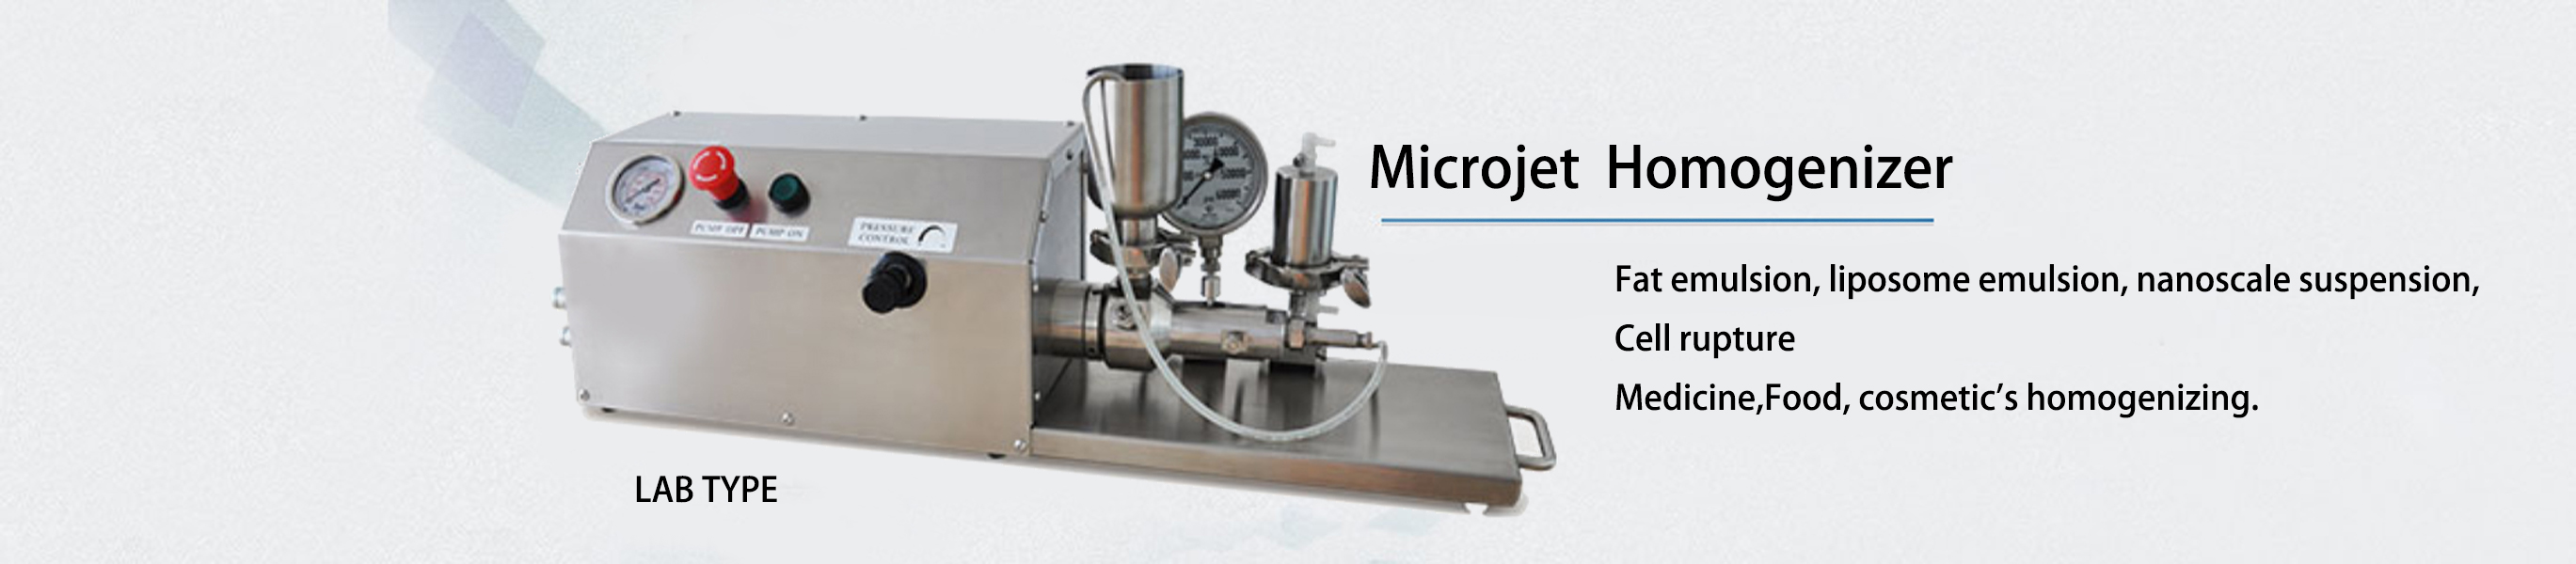 Microjet Homogenizer for Laboratory